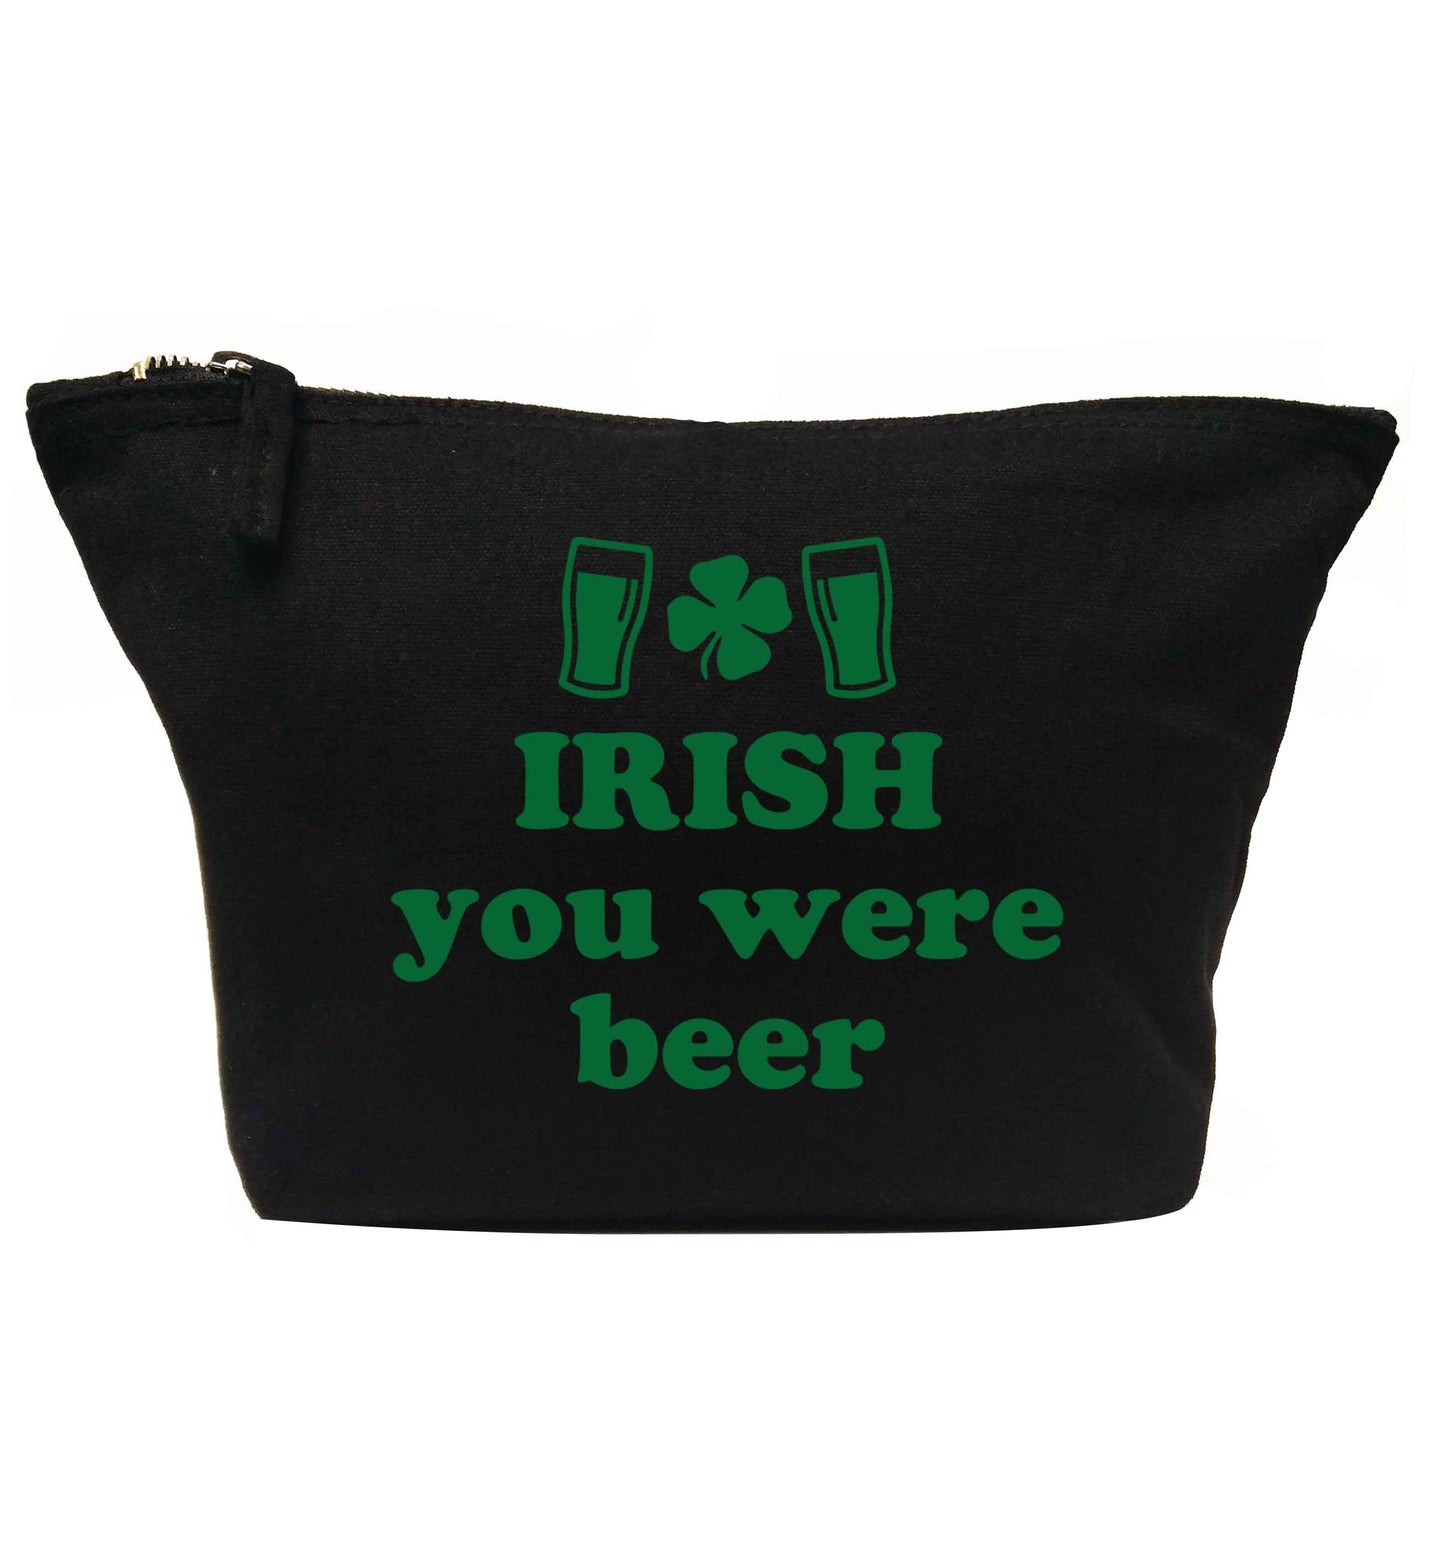 Irish you were beer | Makeup / wash bag